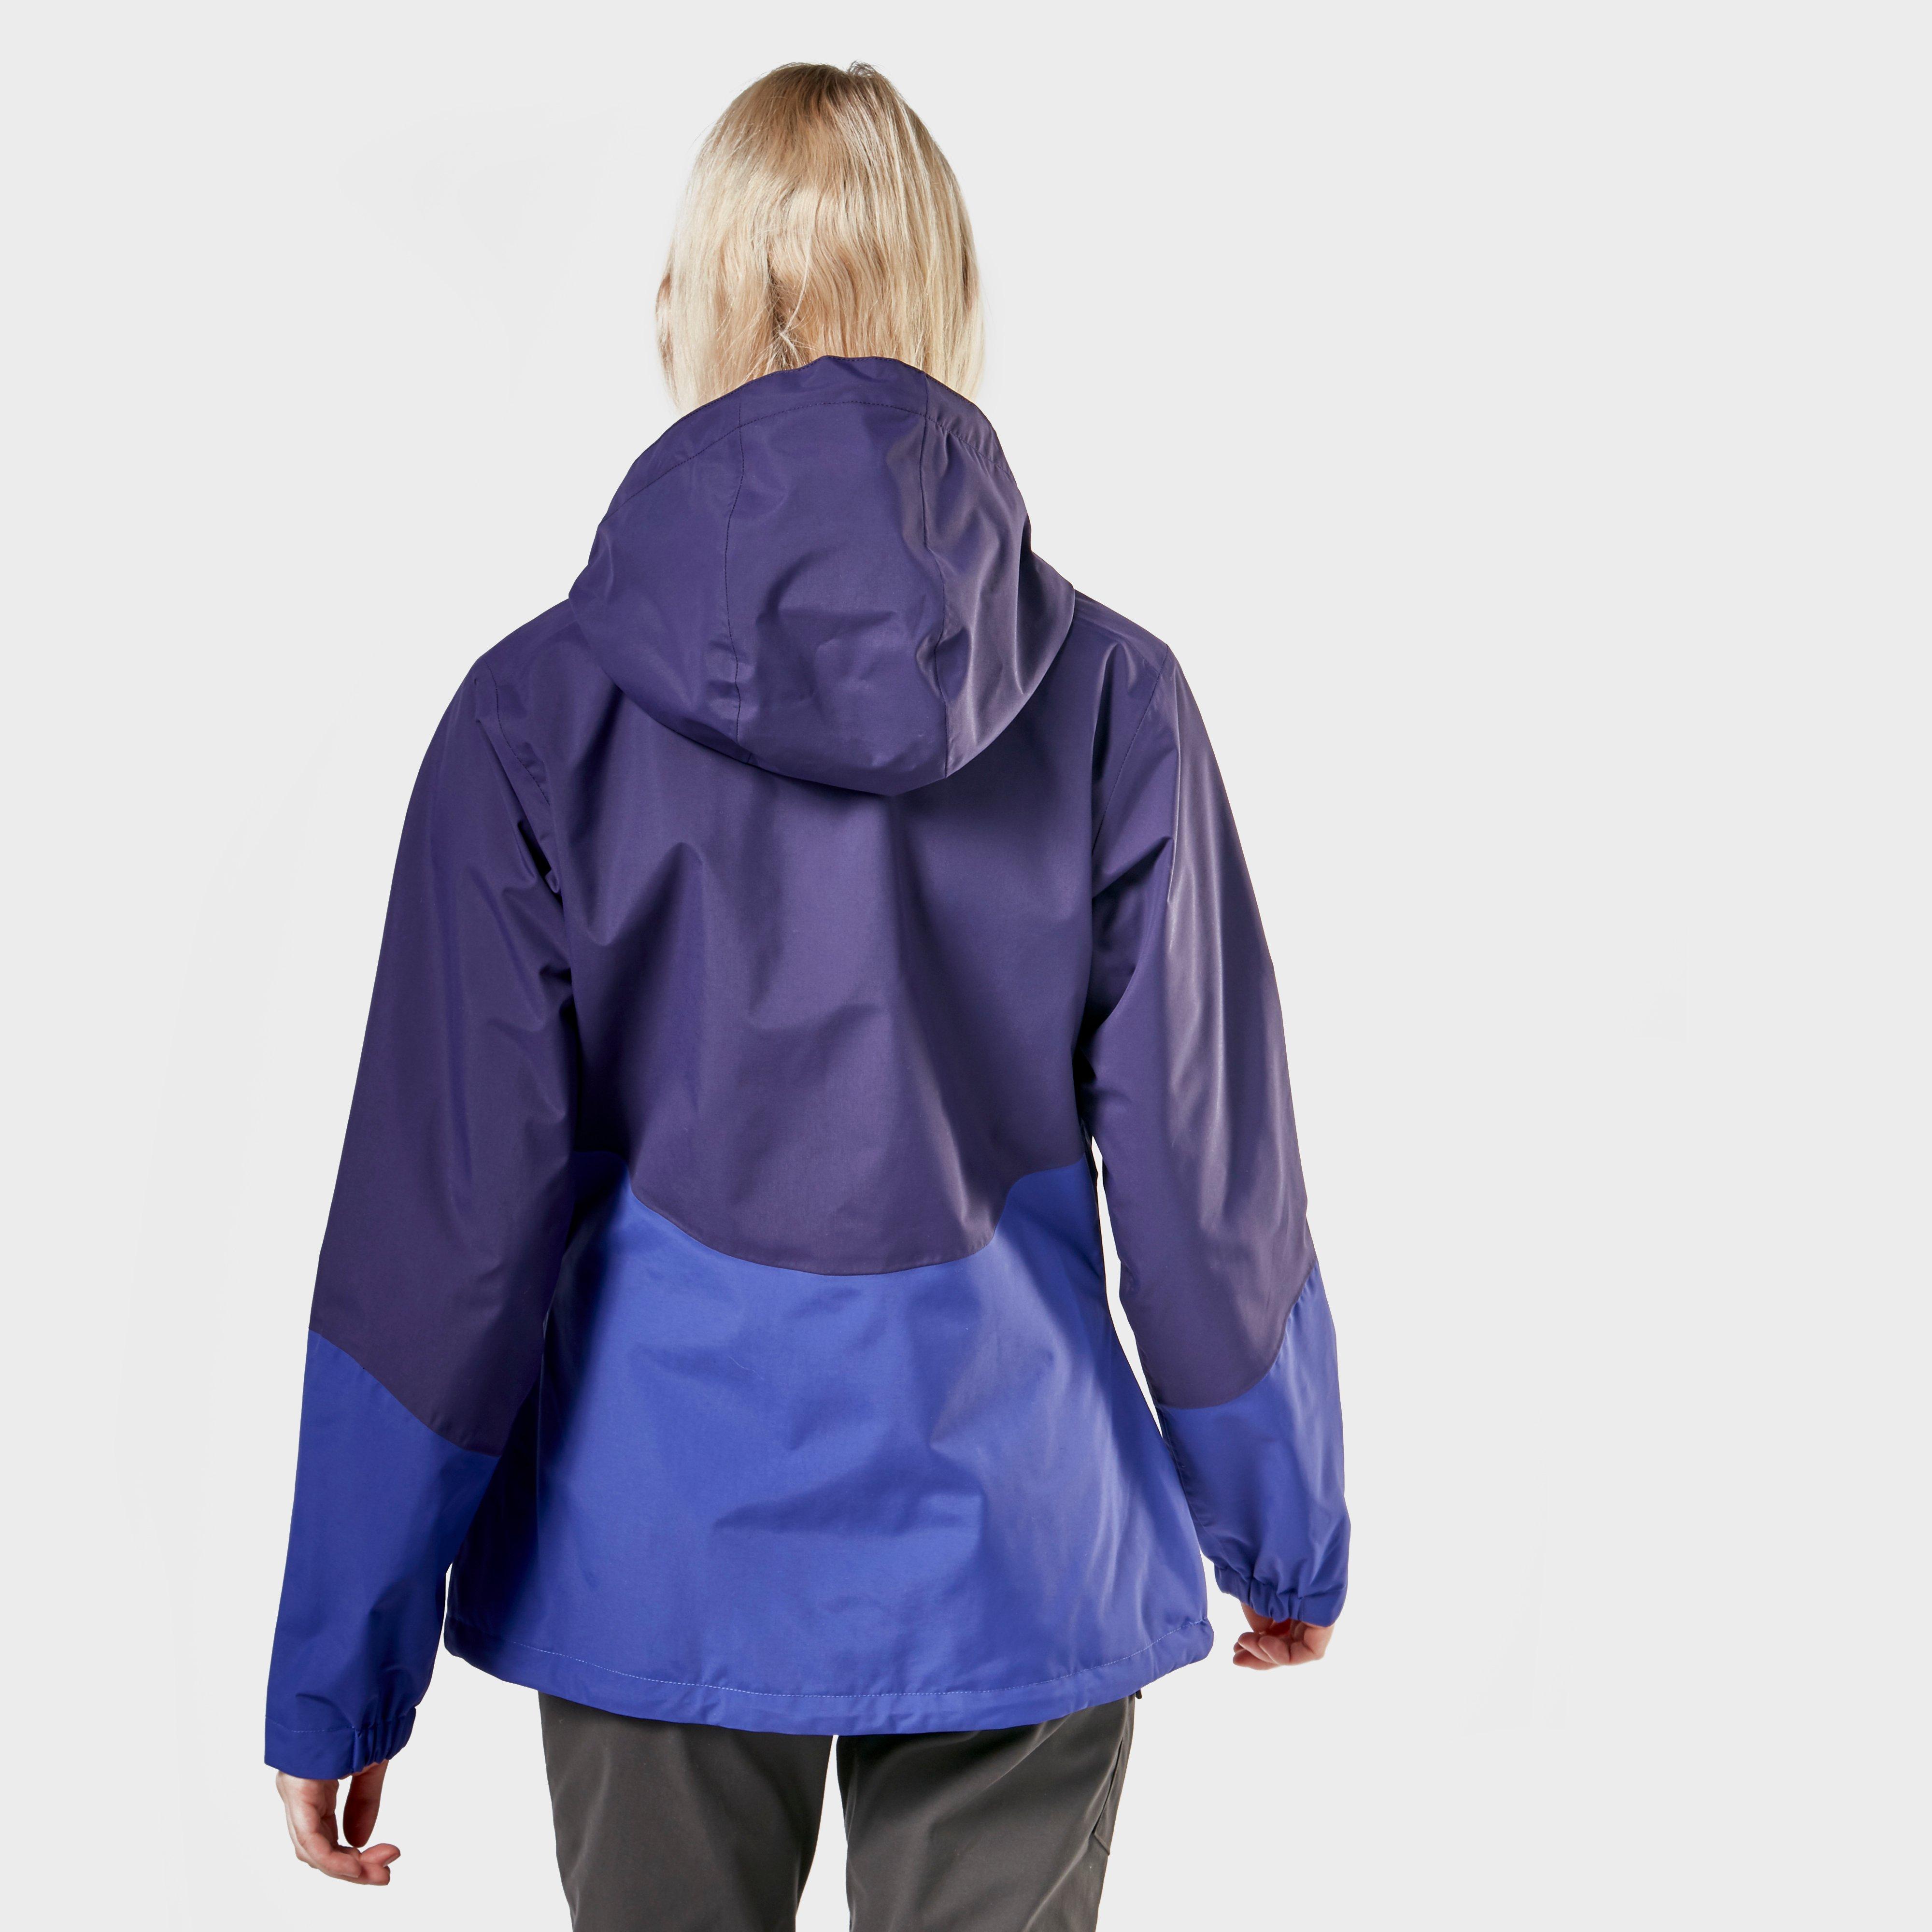 Berghaus Women’s Orestina Waterproof Jacket Review